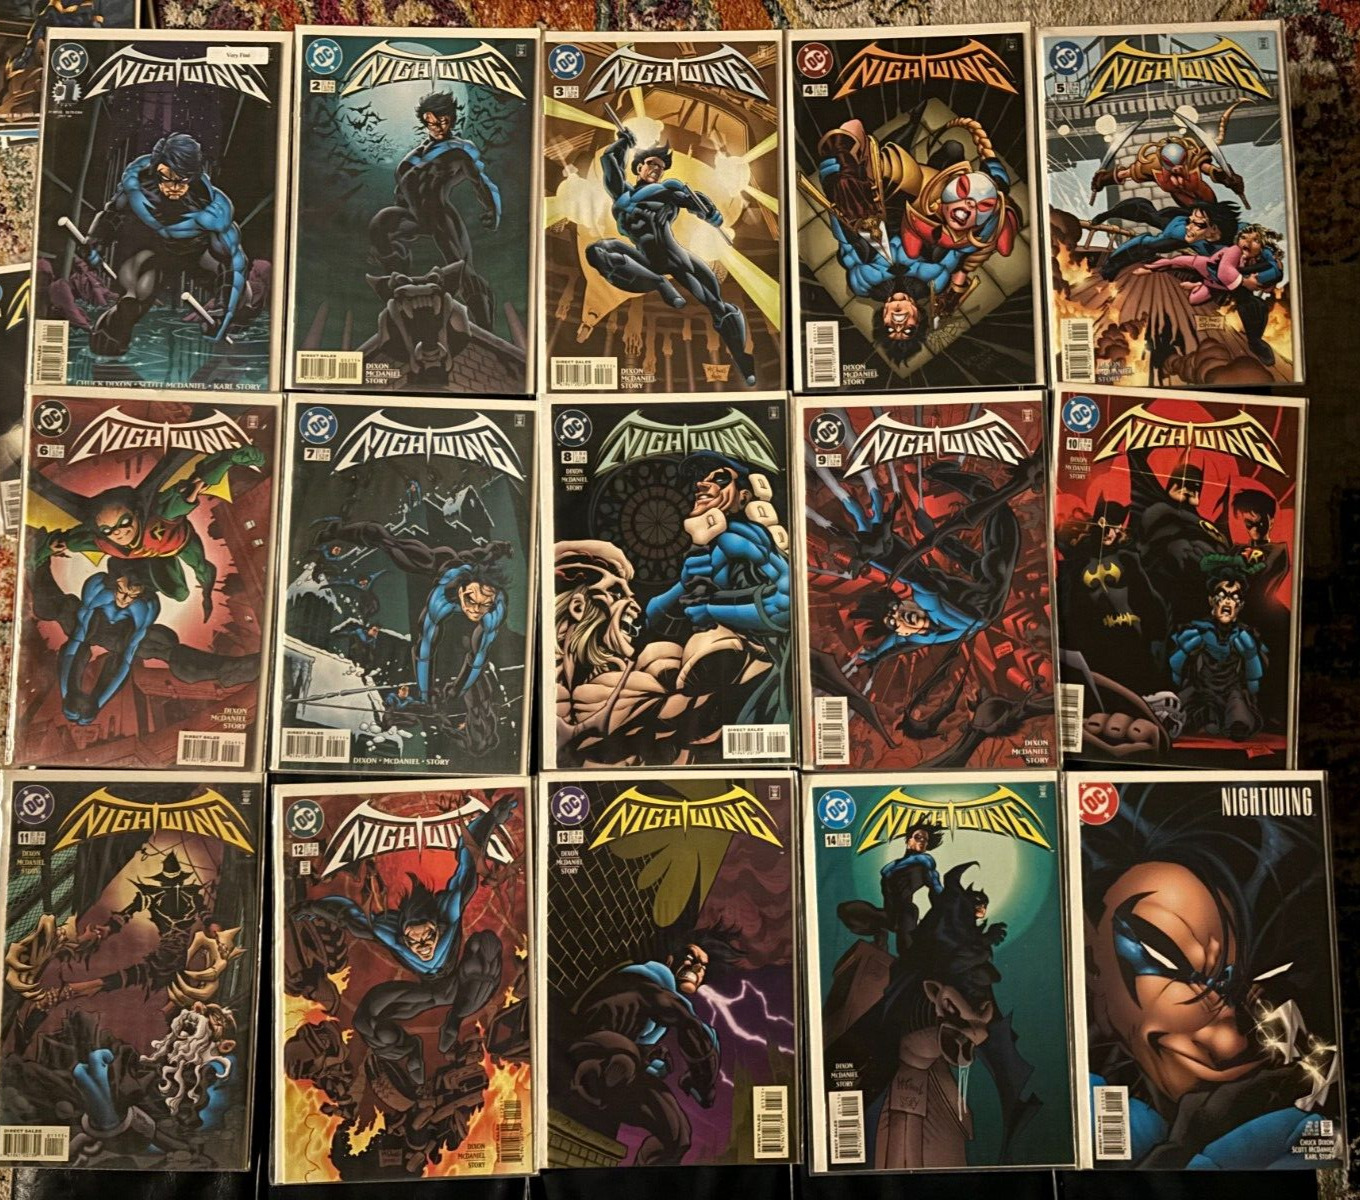 Nightwing #1-#29 (1996)